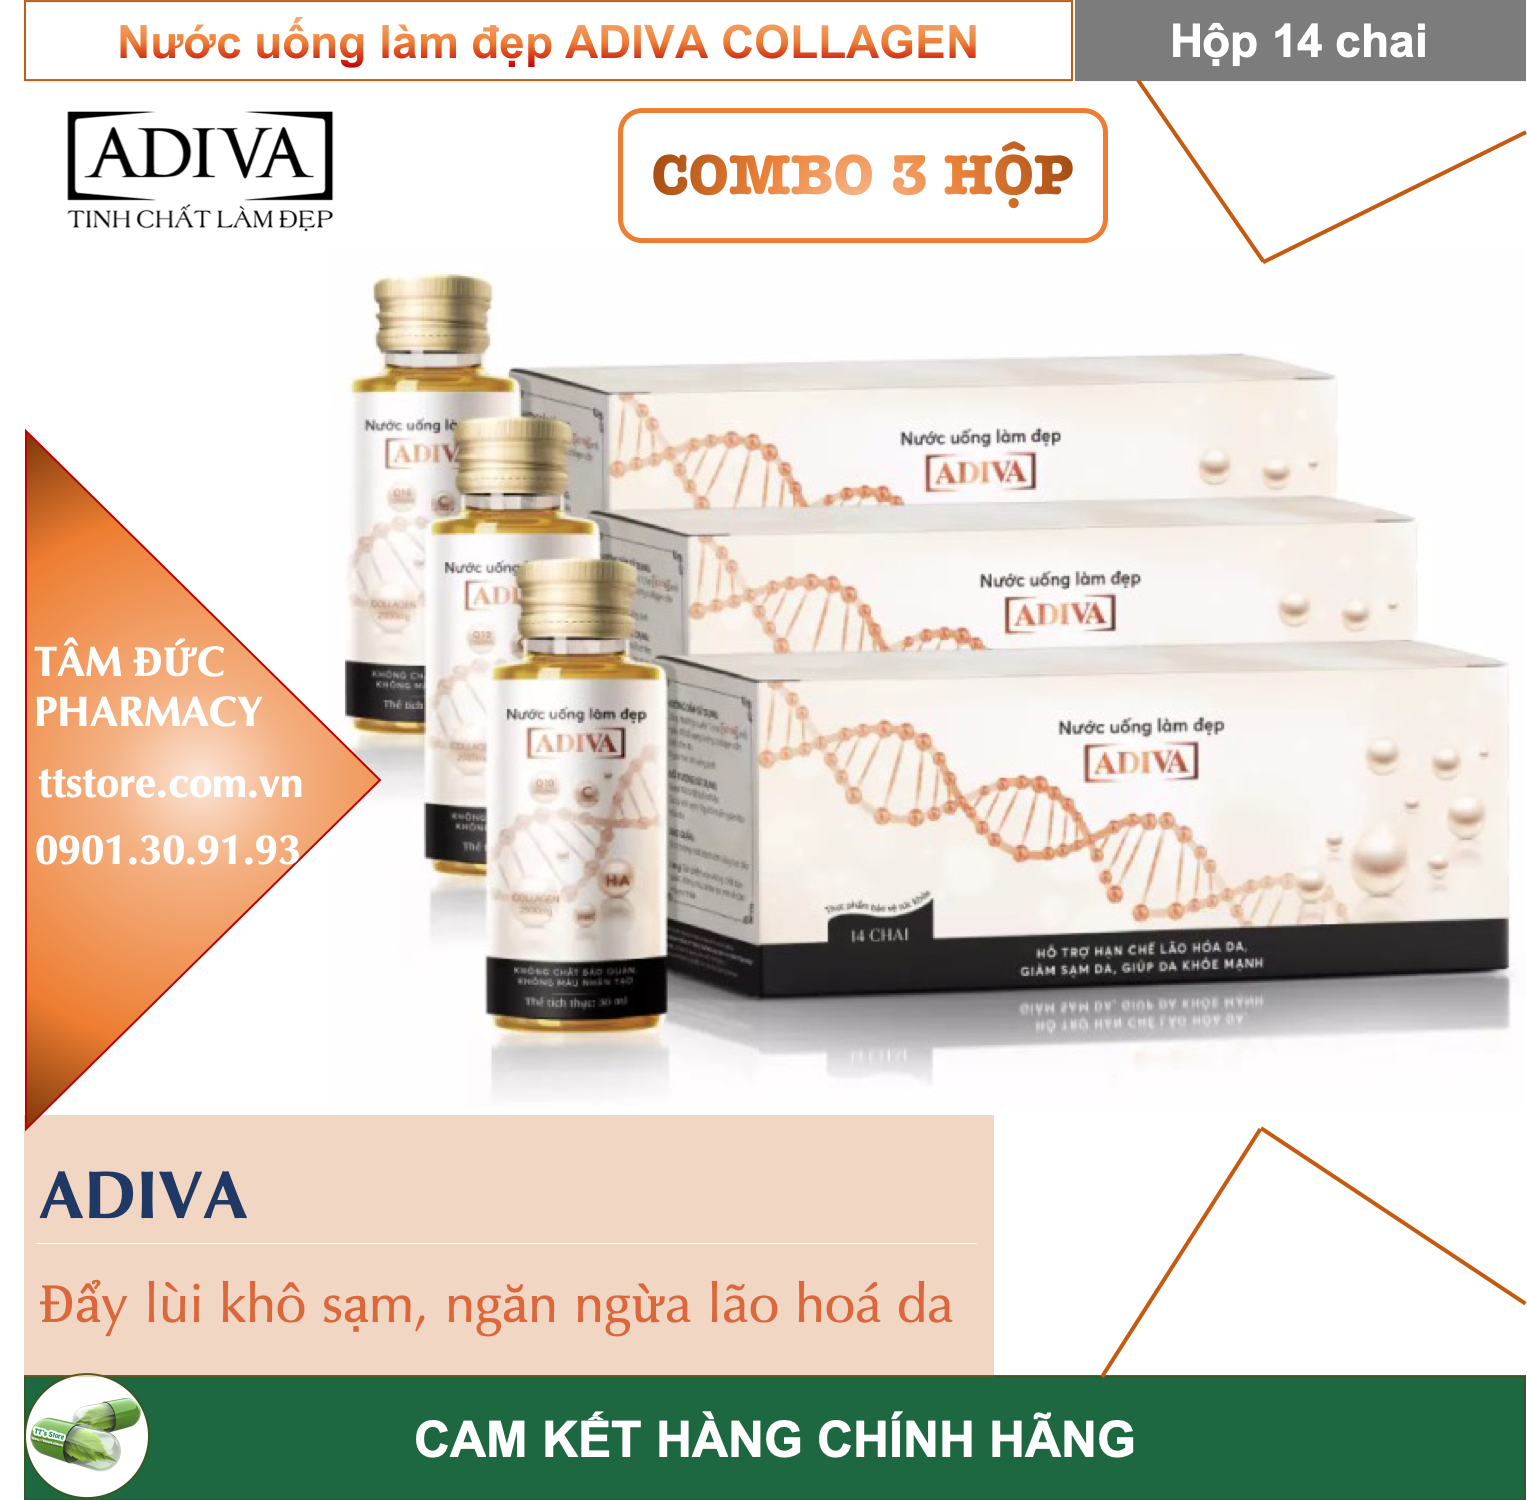 HCMCOMBO 3 HỘP ADIVA Collagen Hộp 14 chai